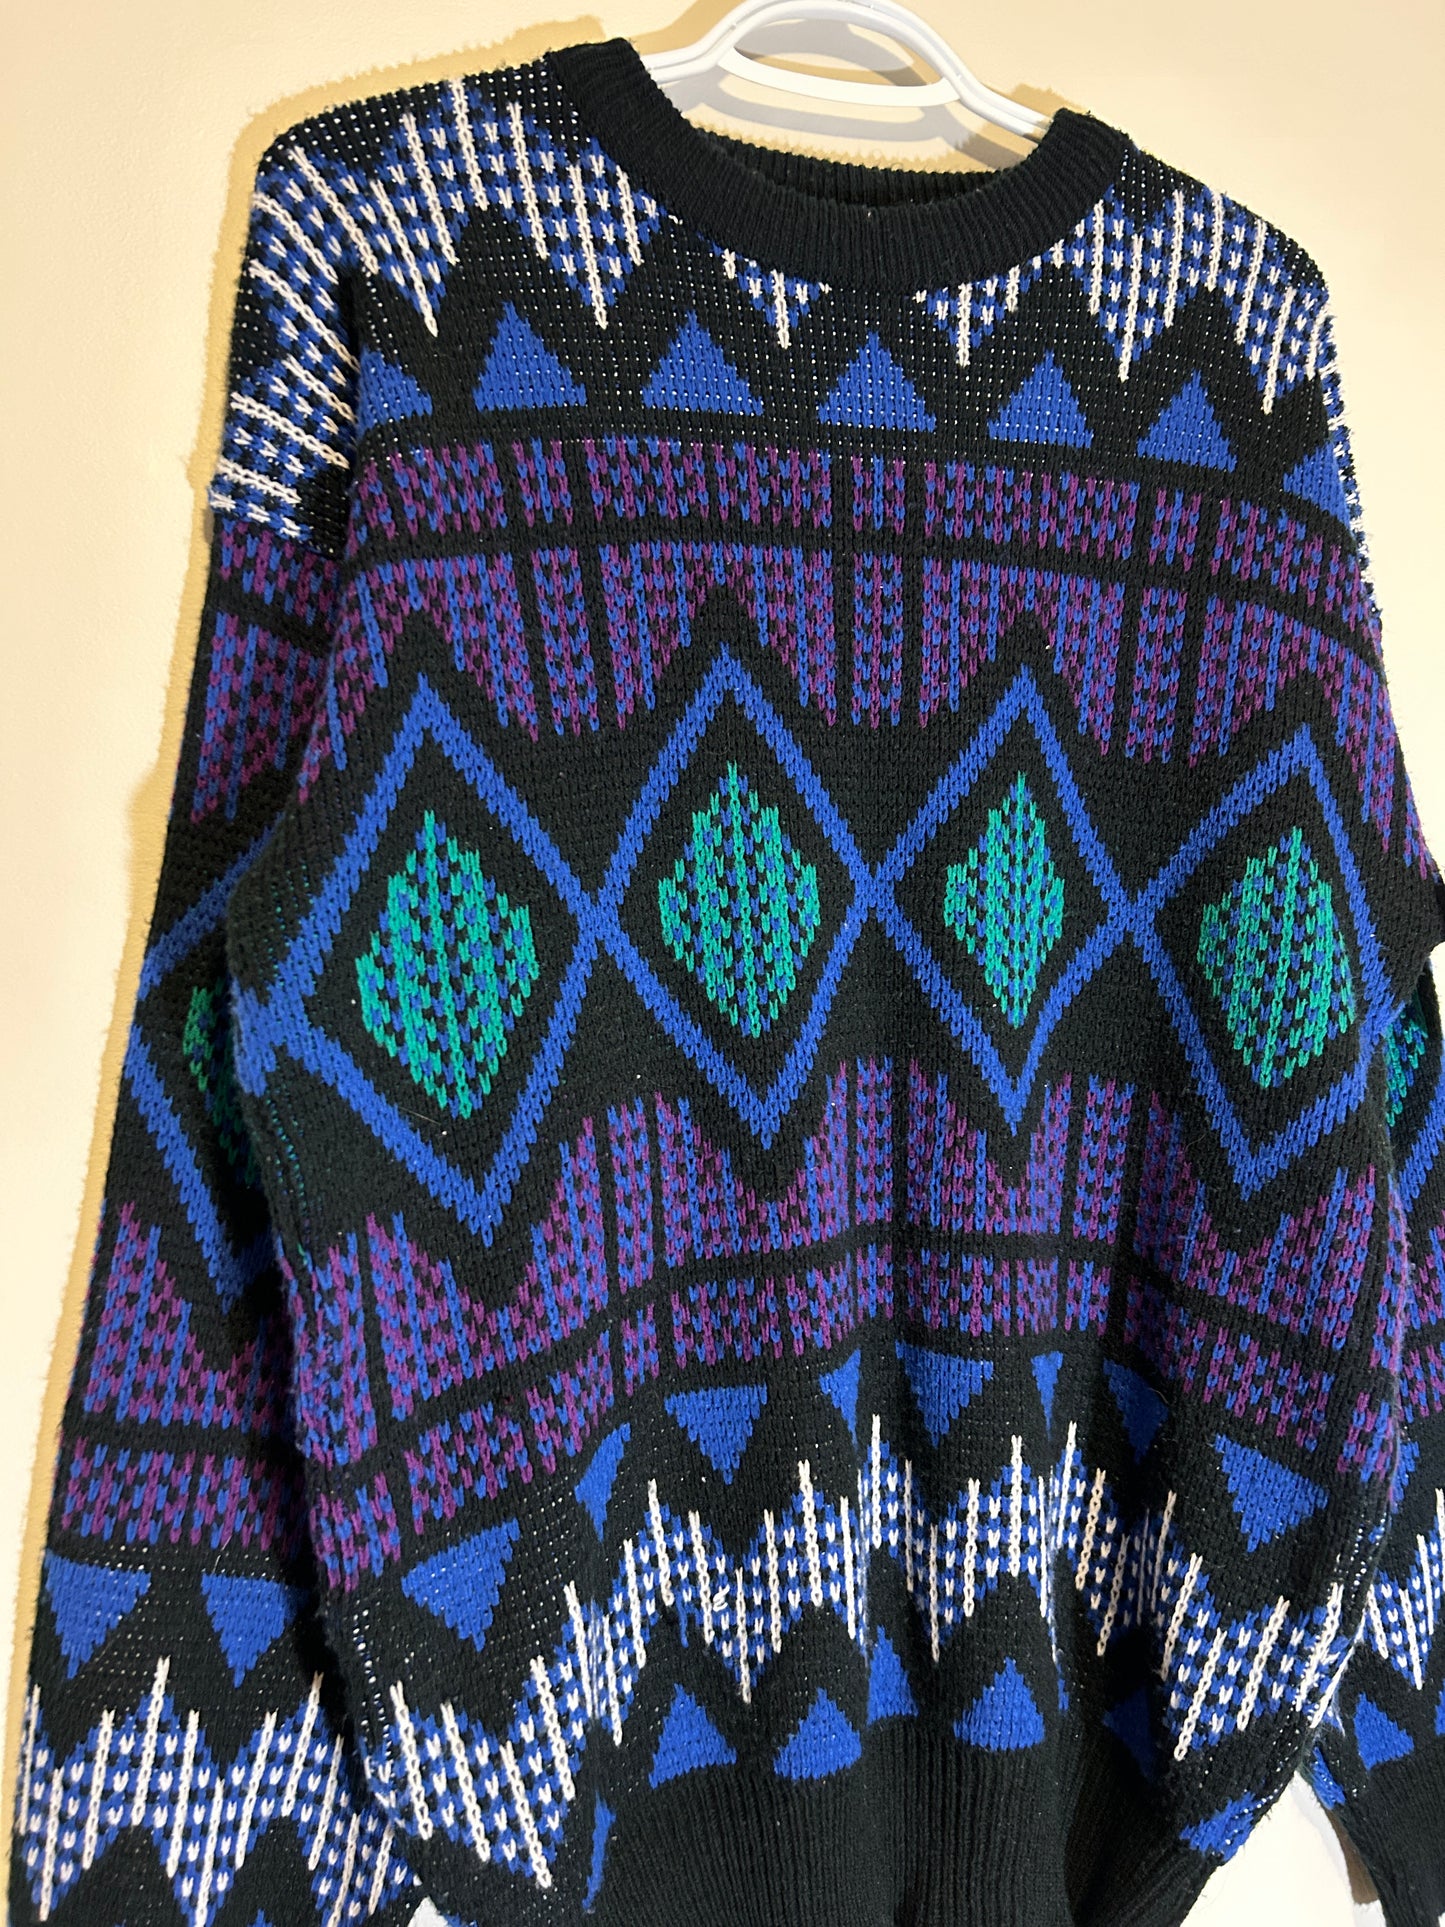 Fine Line Patterned Knit Sweater (M/L)